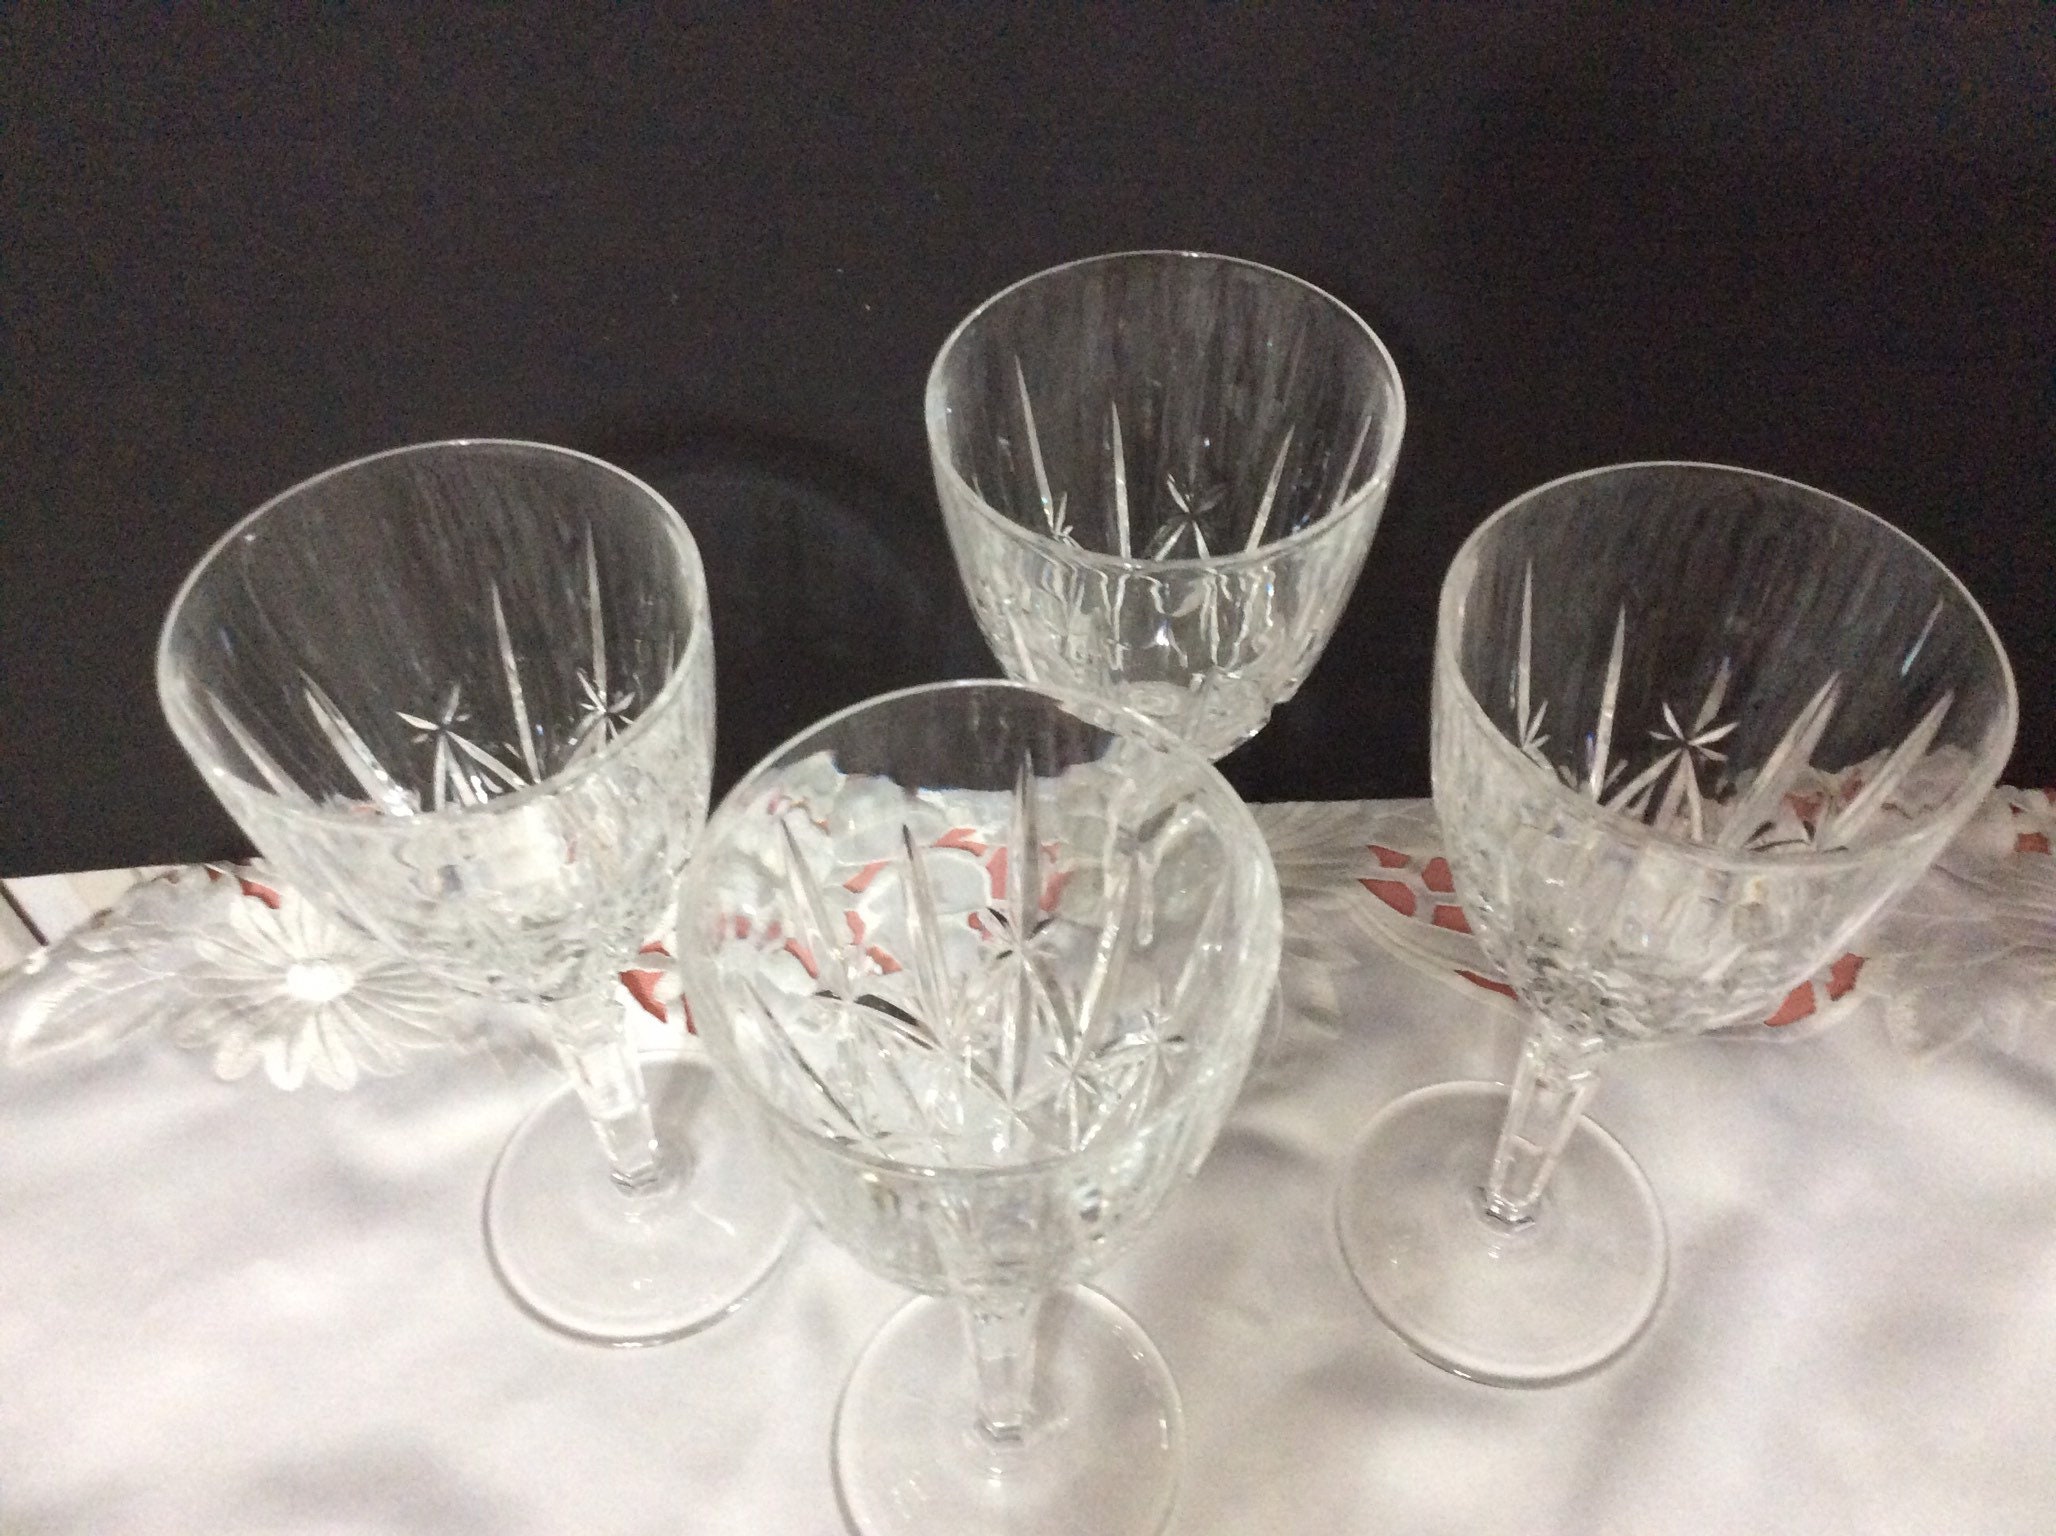 Set of 4 Teal Crystal Wine Glasses — Scout Living